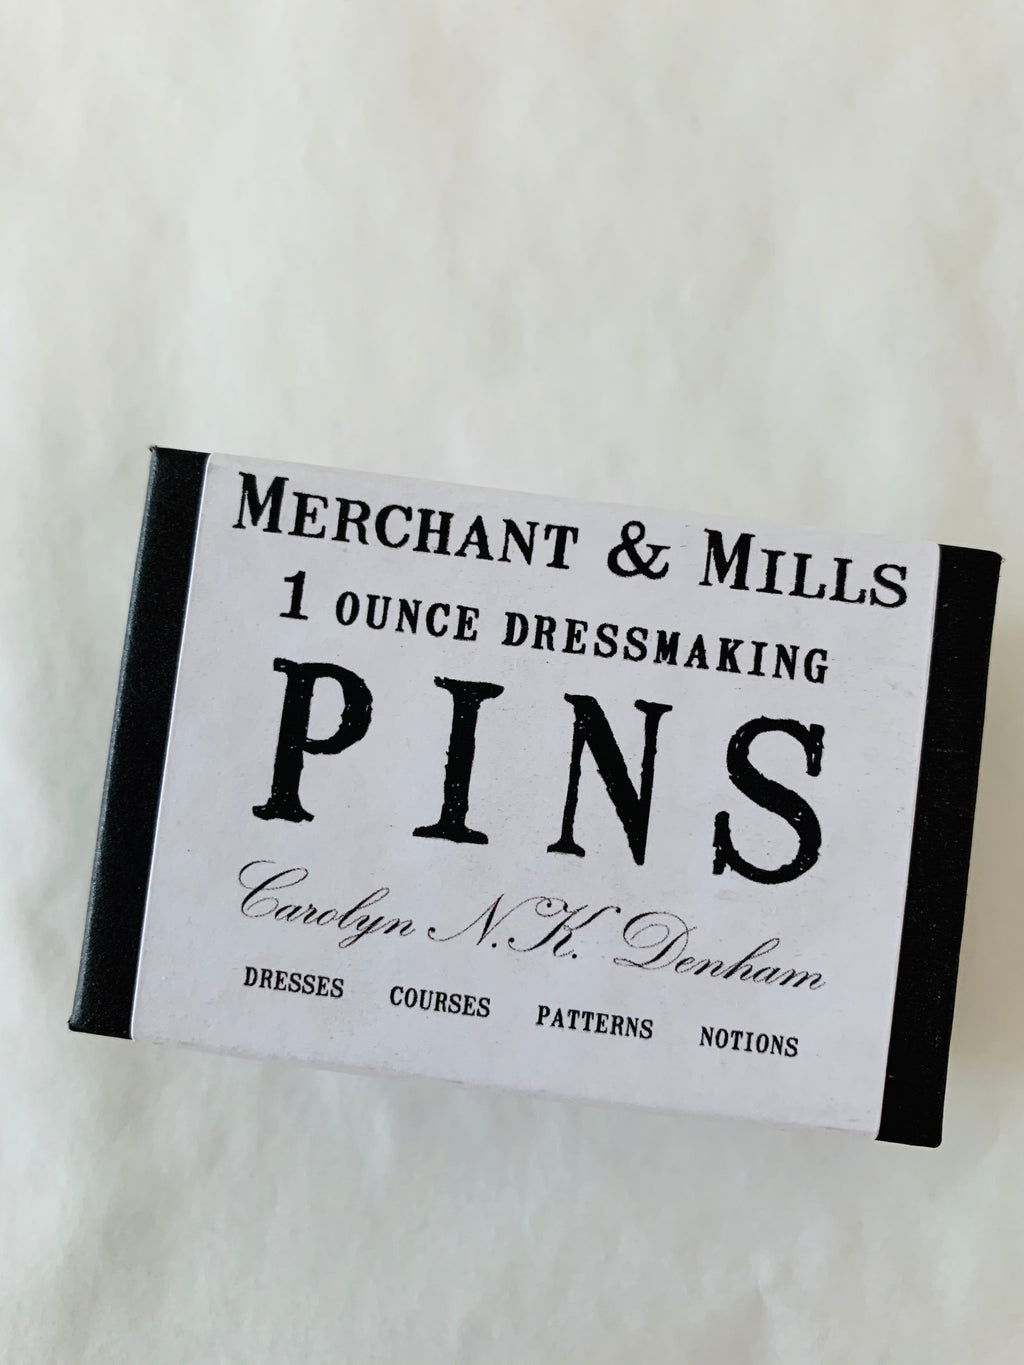 Merchant and Mills 1 ounce dressmaking pins